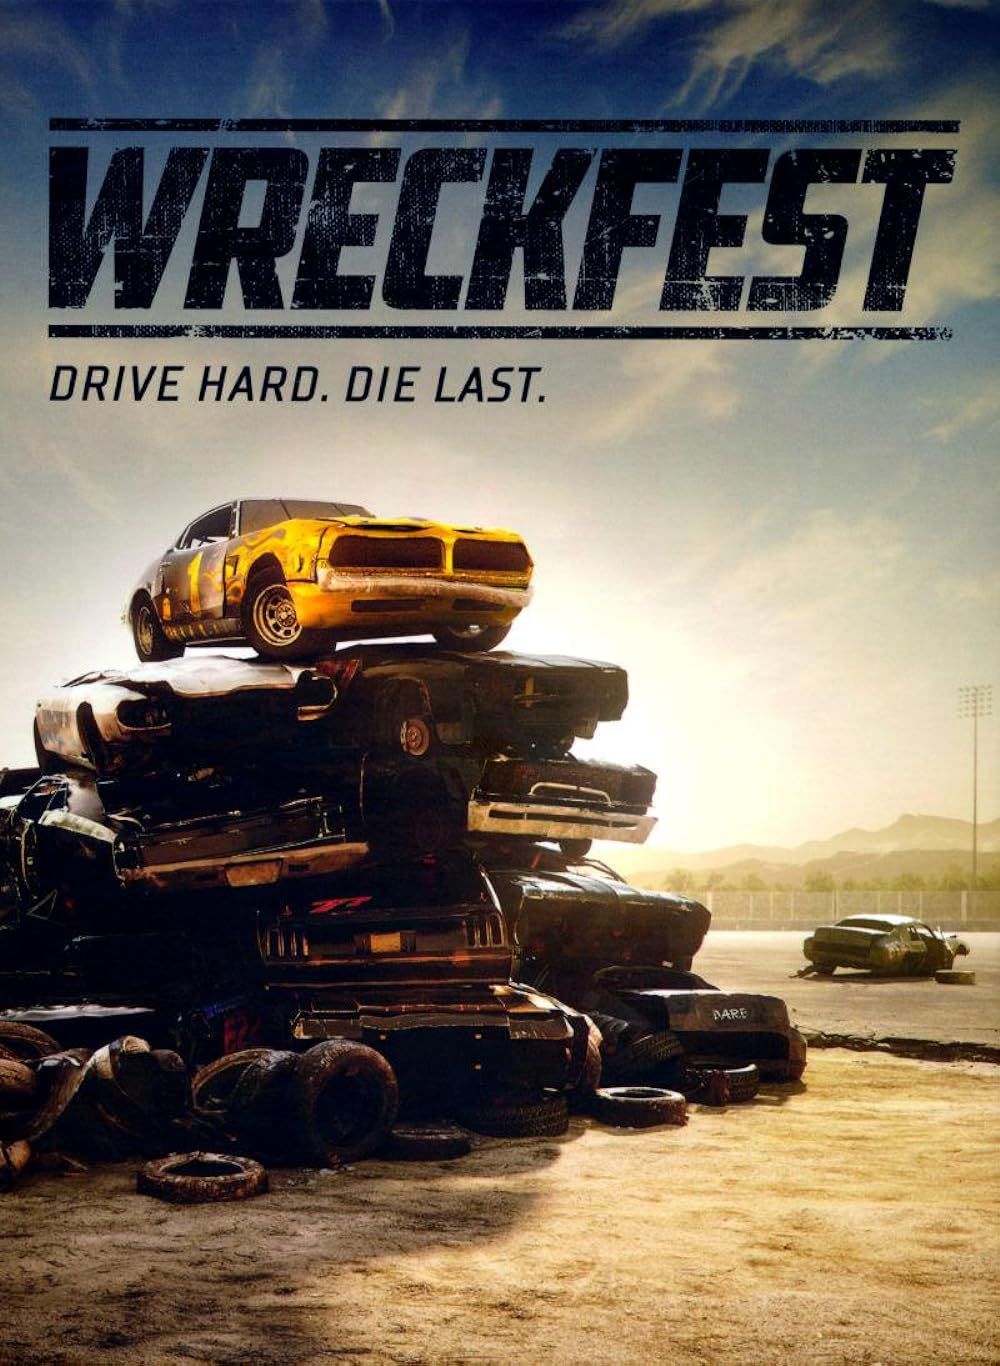 Wreckfest video game poster